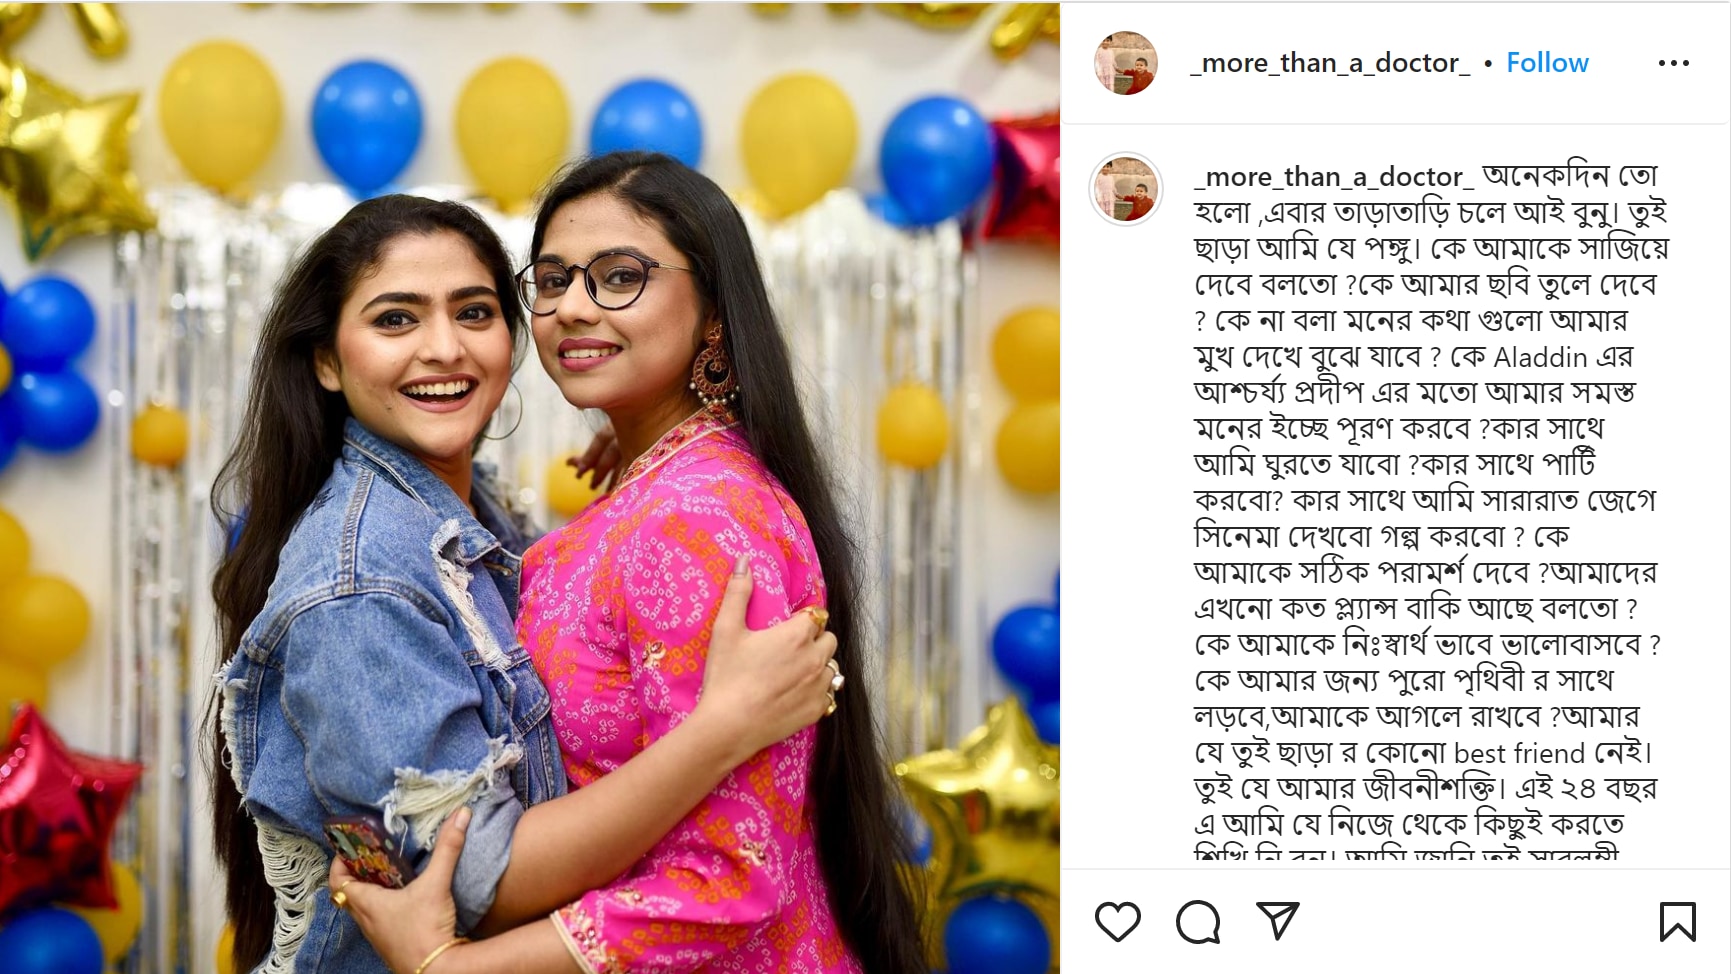 Aishwarya Sharma's post on Instagram.